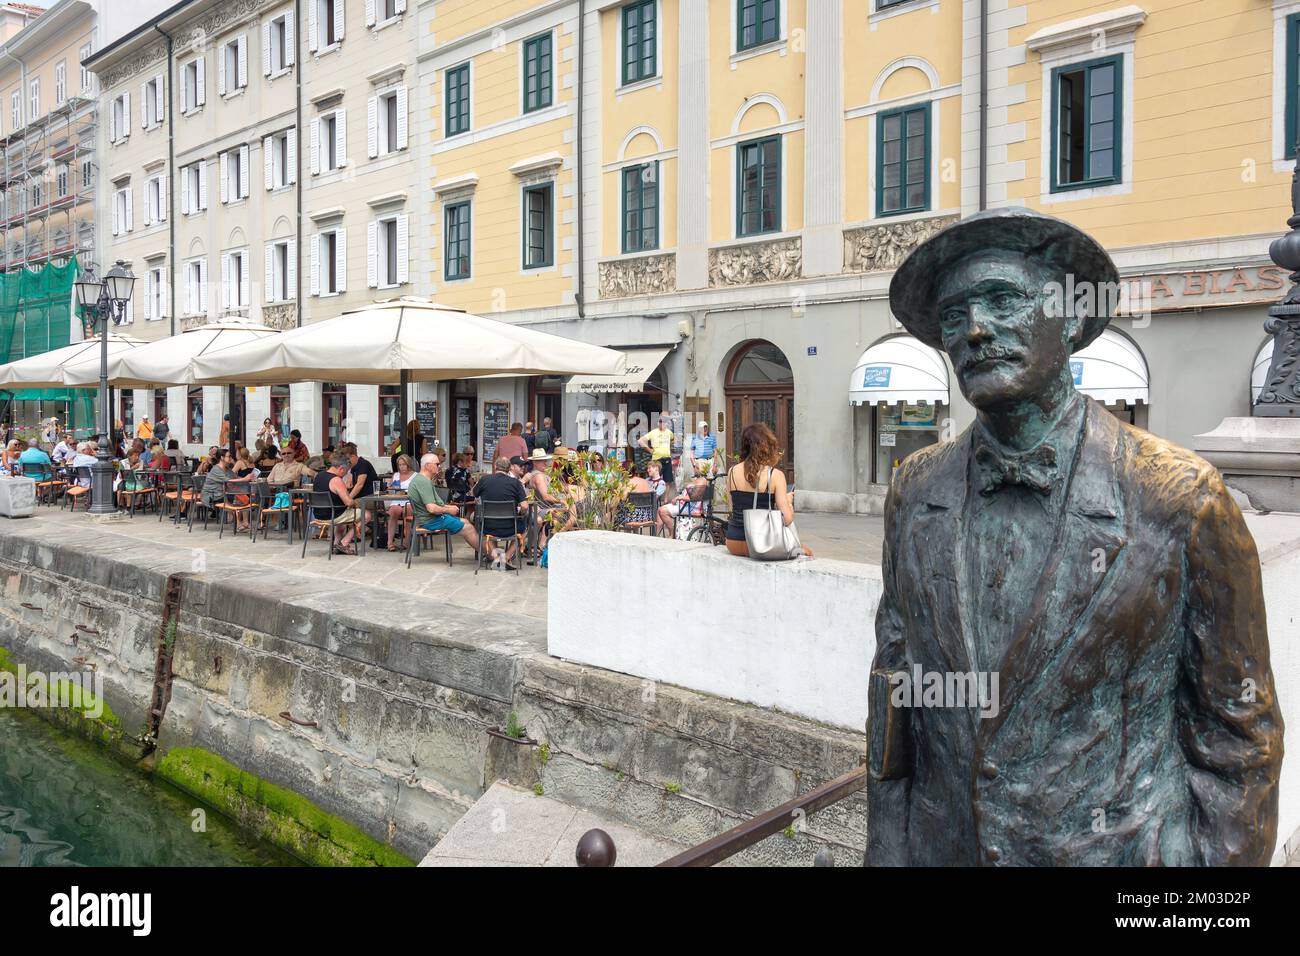 Statue de James Joyce par Canal Grande di Trieste, Piazza Sant'Antonio Nuovo, Trieste, région Friuli Venezia Giulia, Italie Banque D'Images